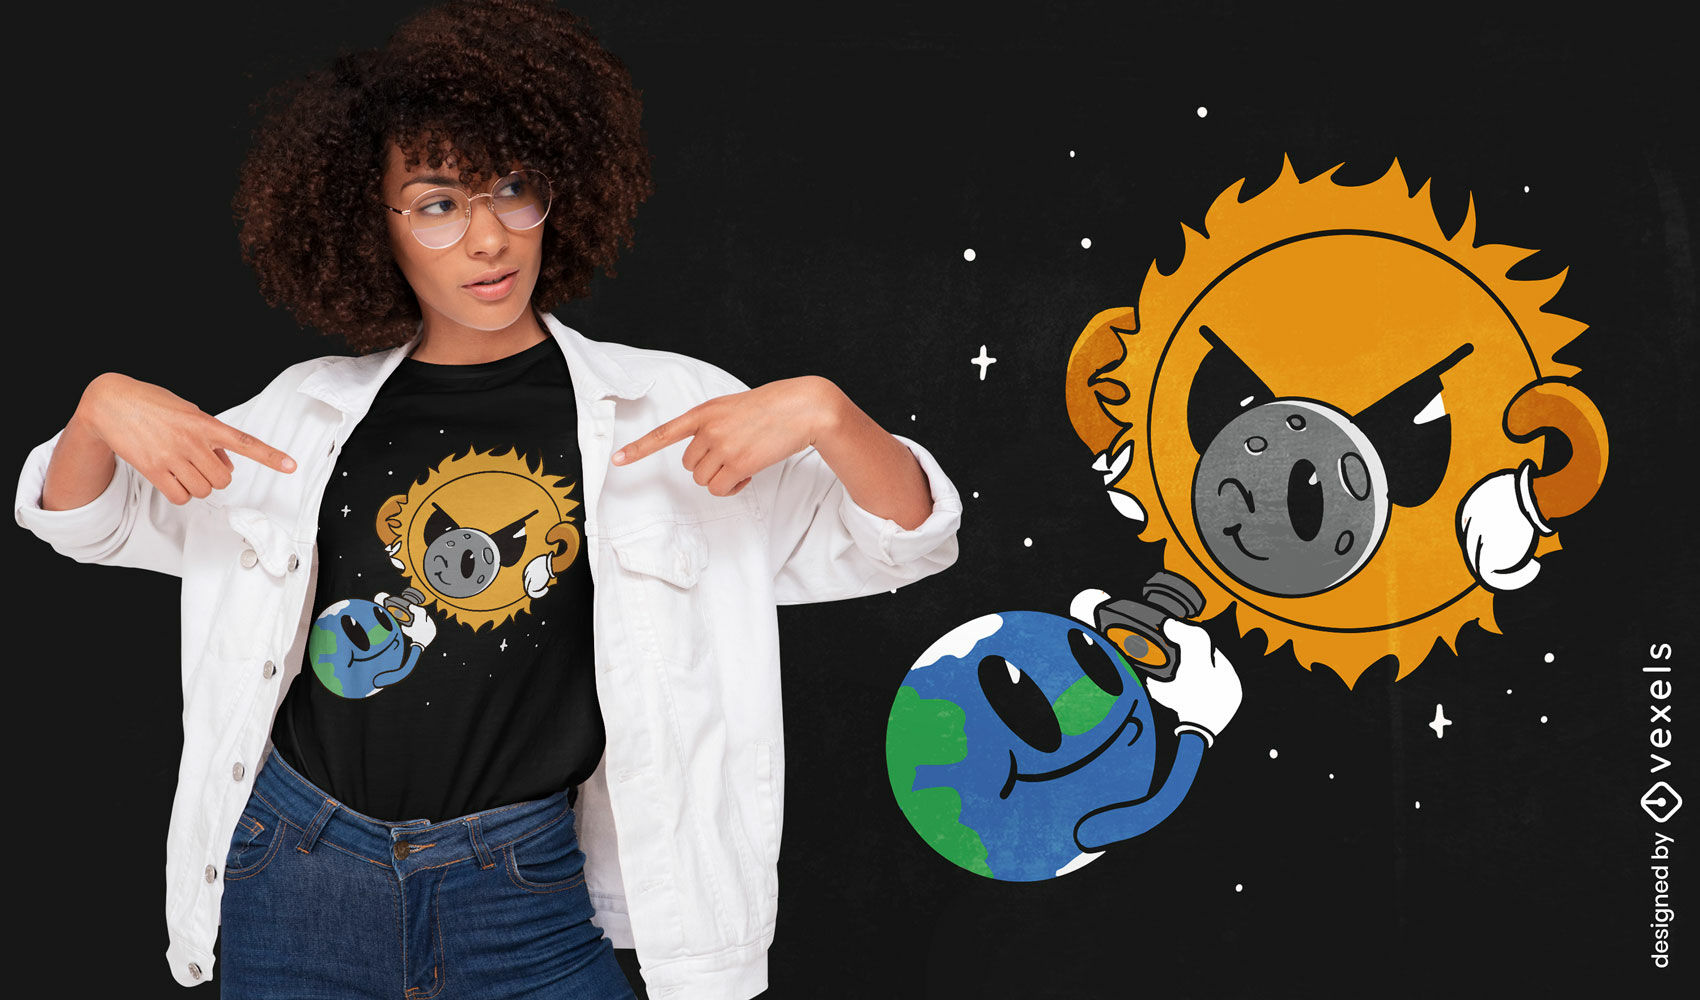 Photobomb eclipse t-shirt design